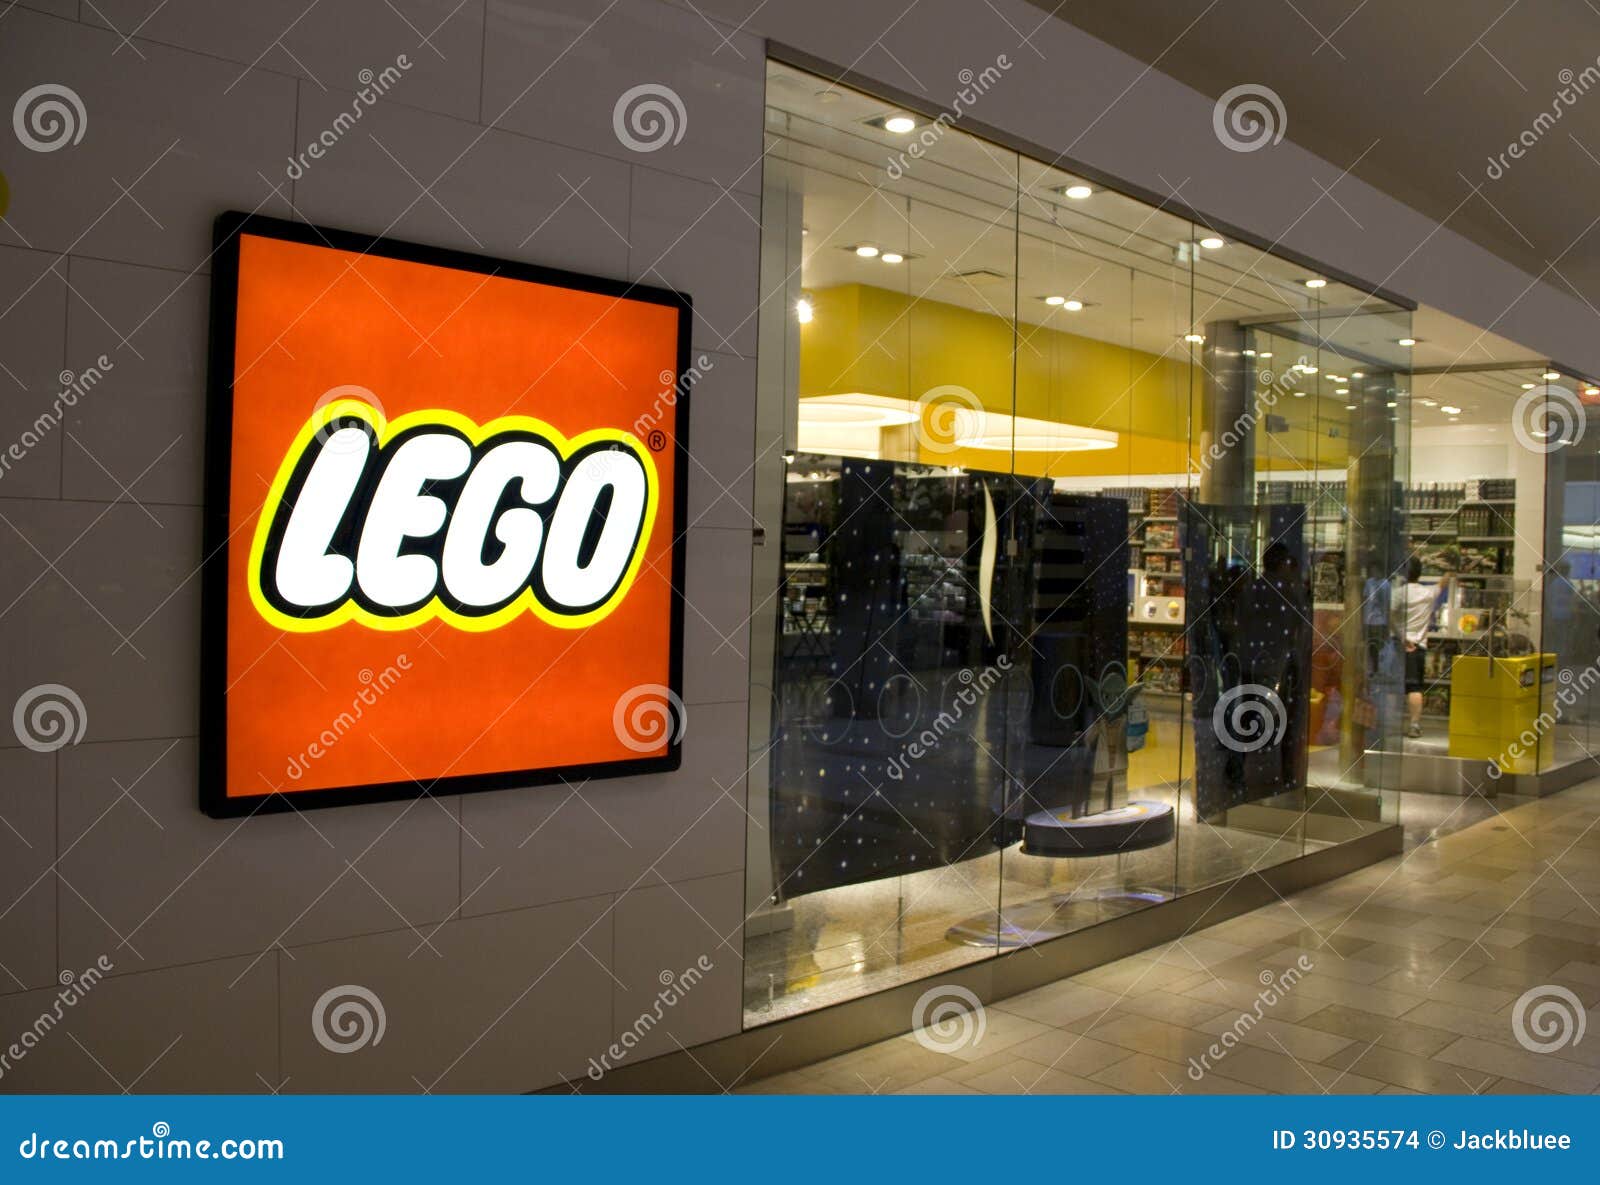 hvile Fantasifulde tilnærmelse Lego store editorial stock image. Image of square, washington - 30935574